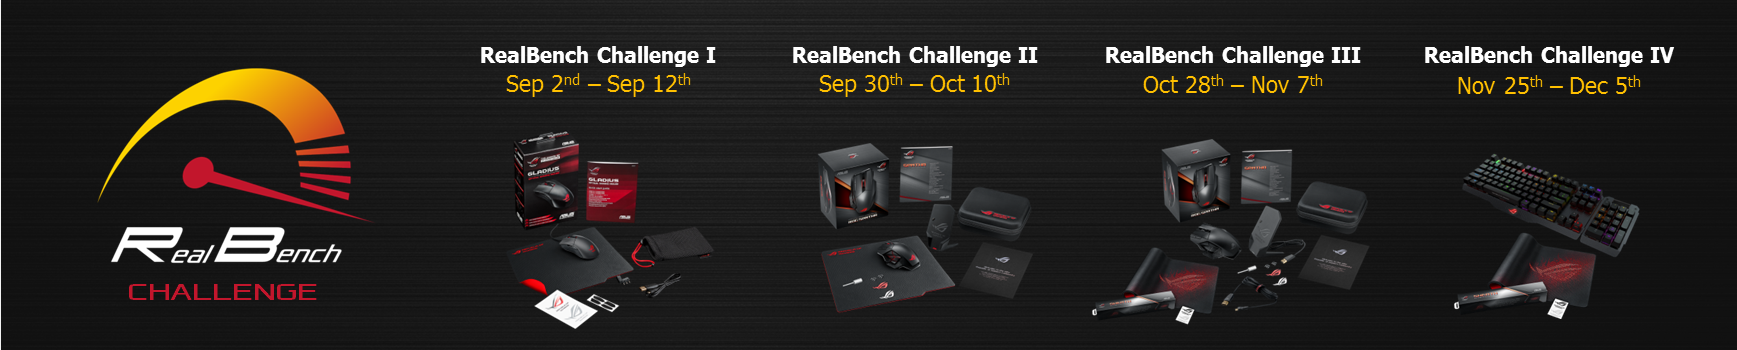 RealBench_Challenge_Prizes